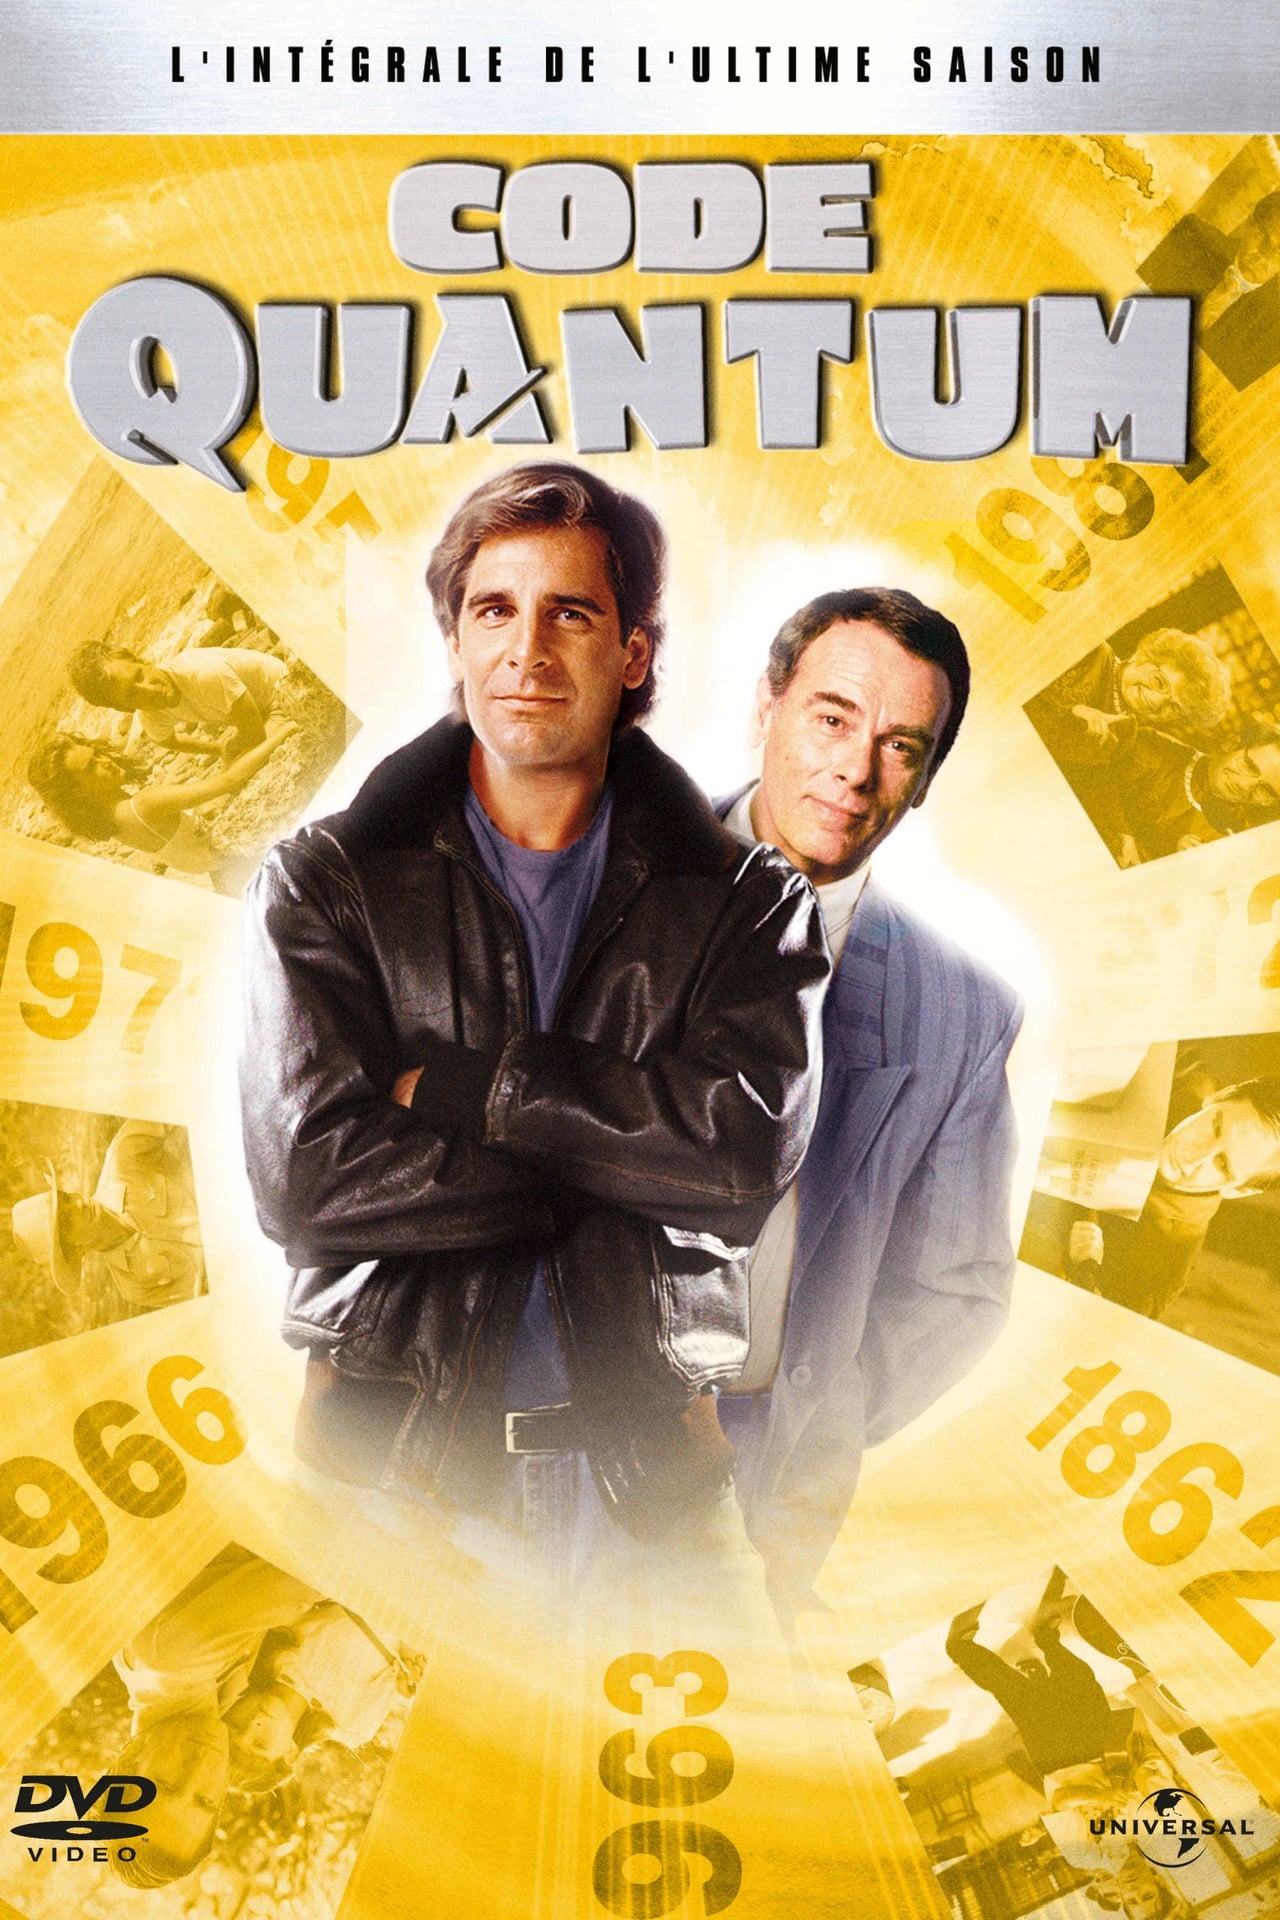 Quantum Leap, Season 3 wiki, synopsis, reviews Movies Rankings!